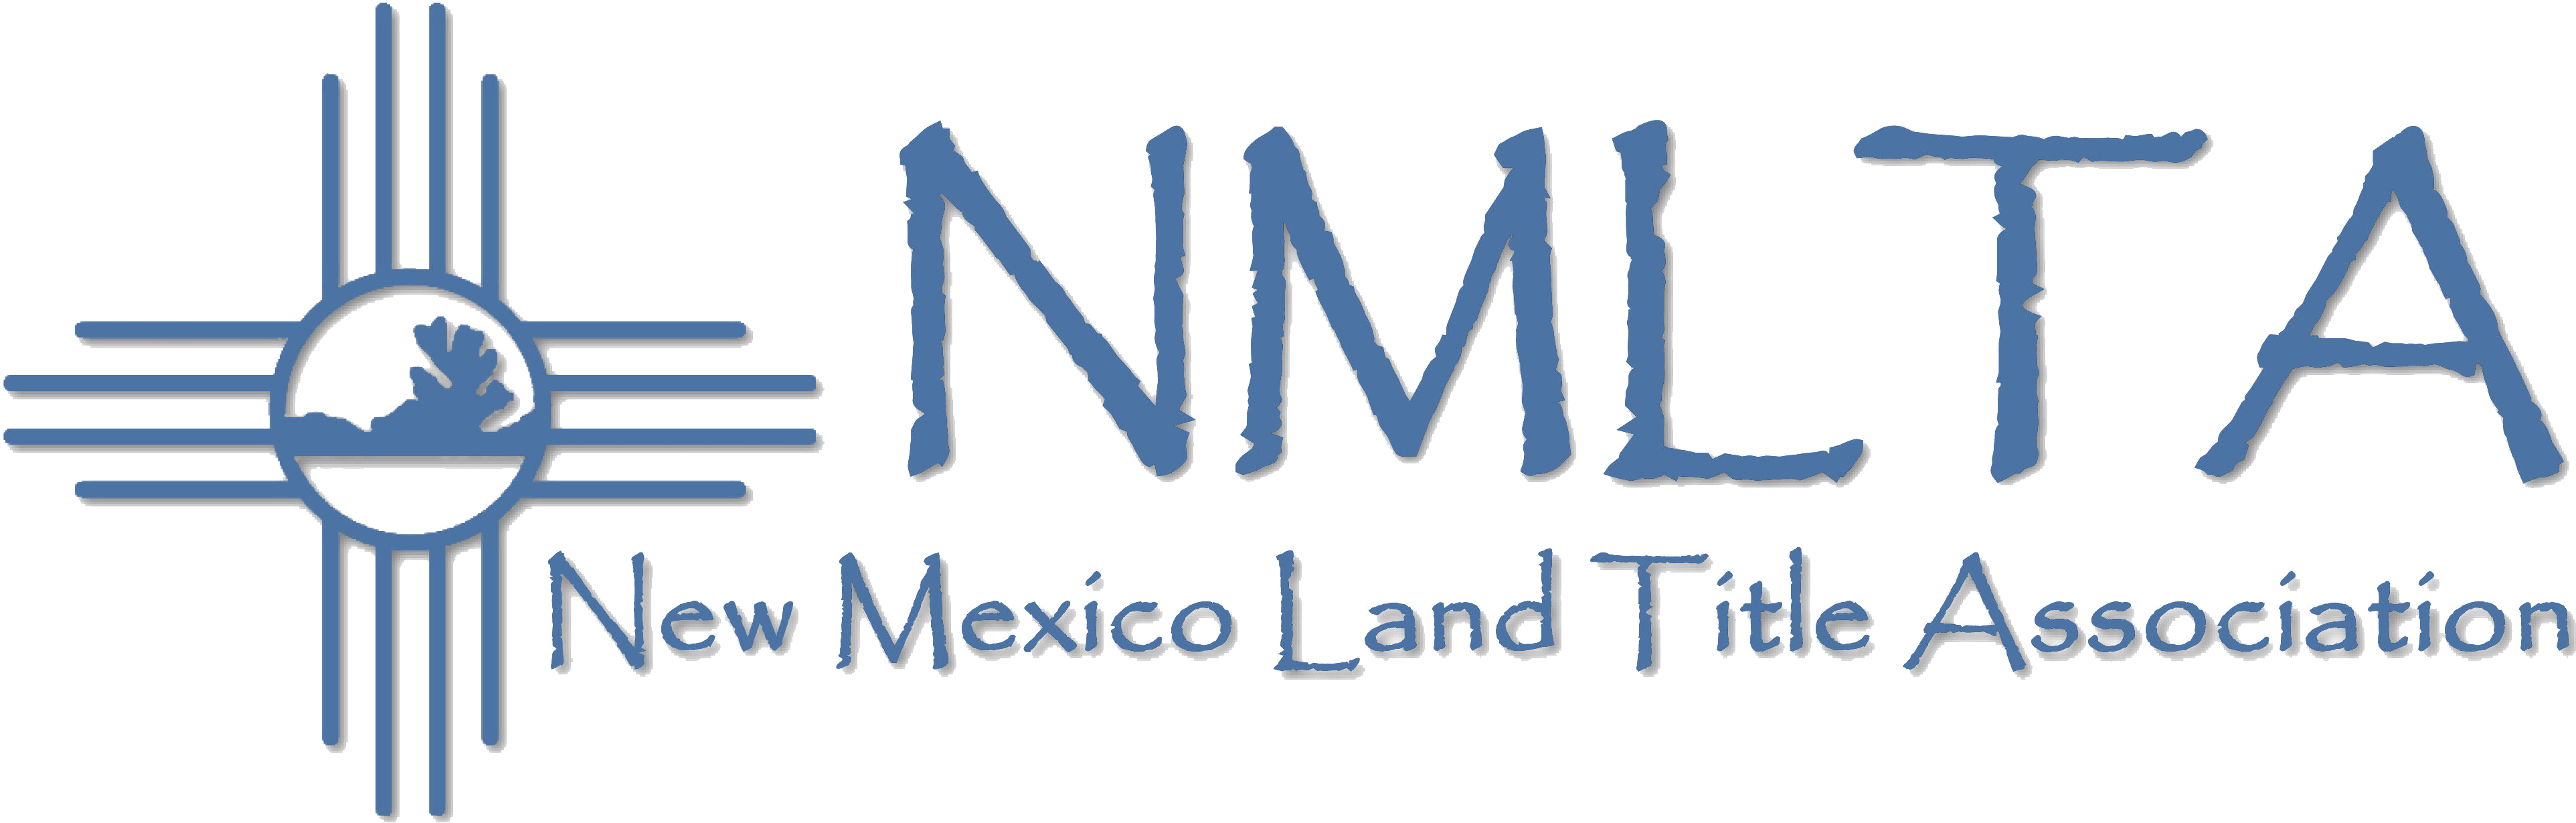 New Mexico Land Title Association Logo